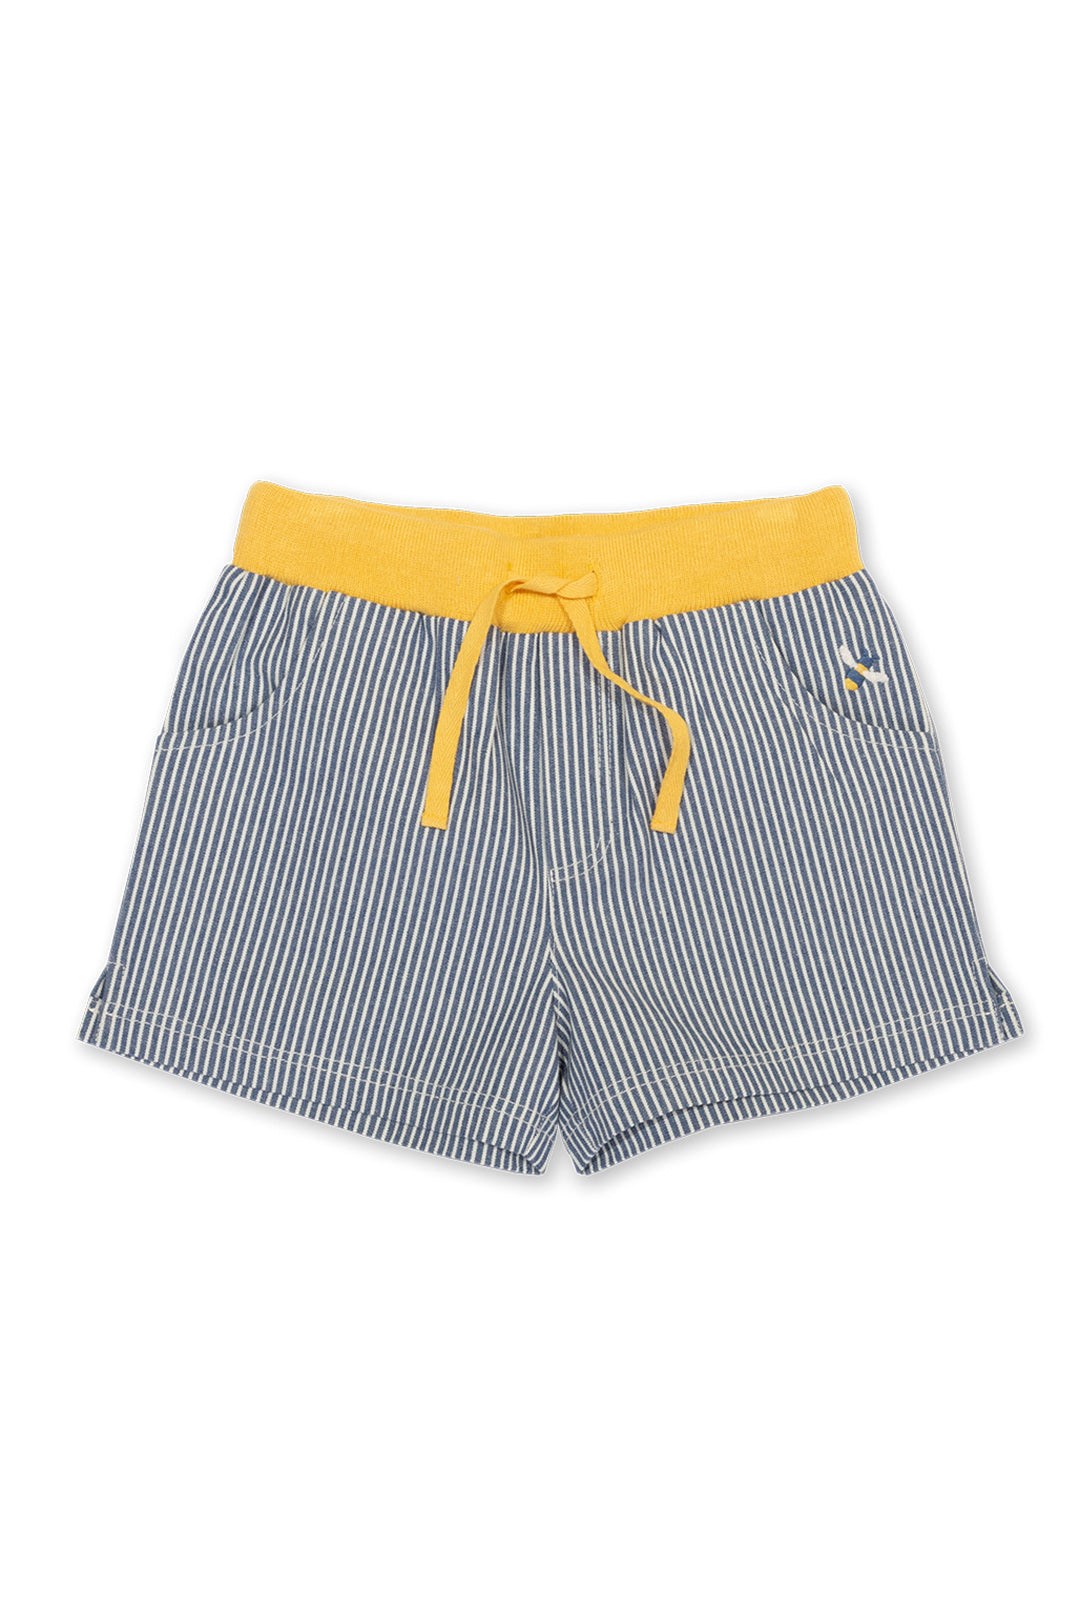 Bumble Kids Organic Cotton Shorts -